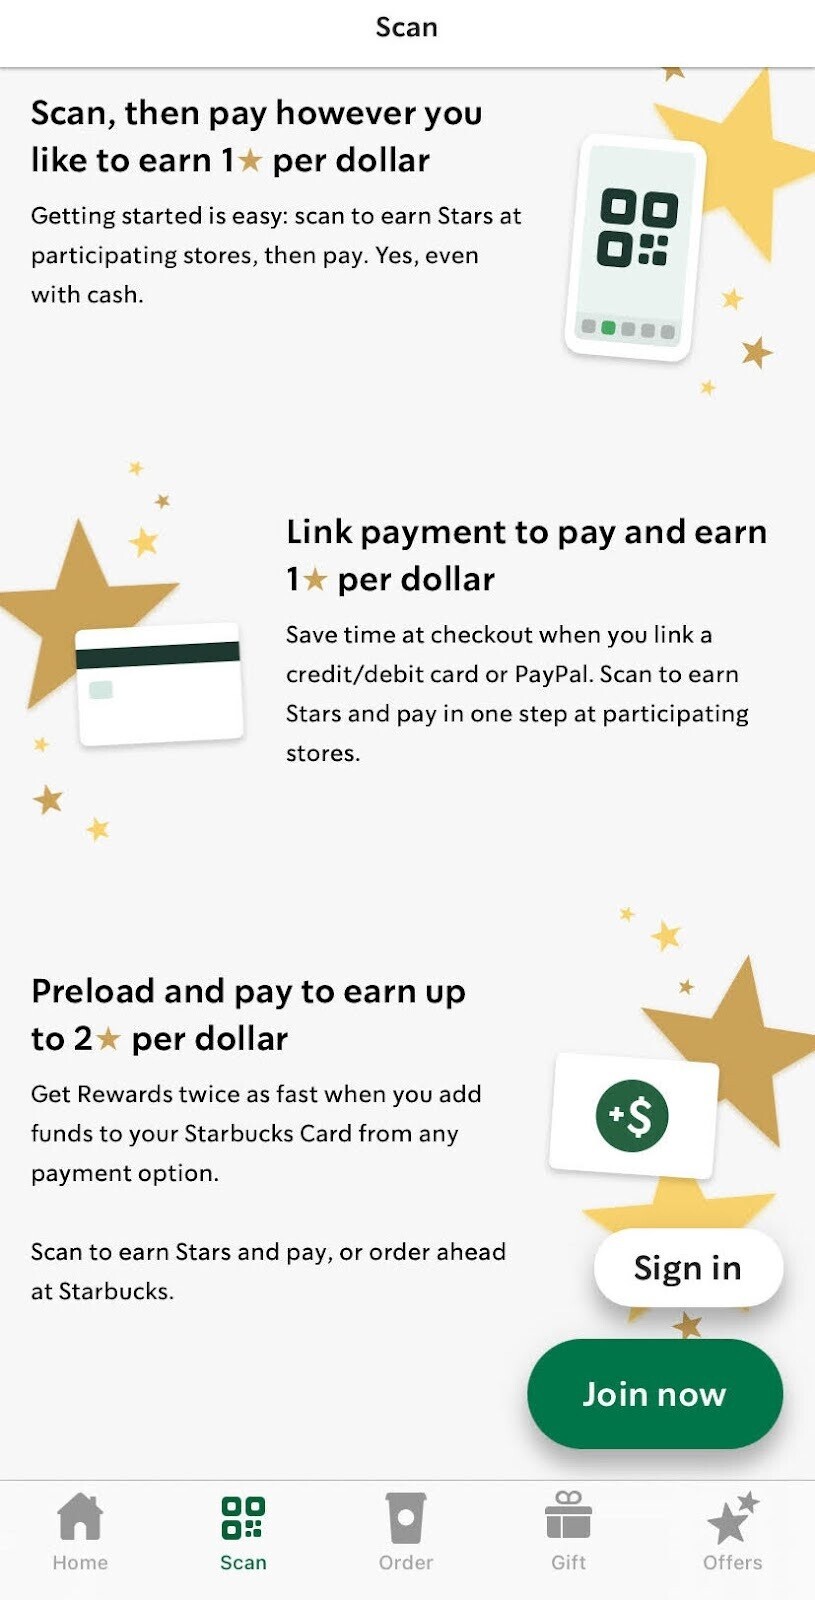 Starbucks Rewards program